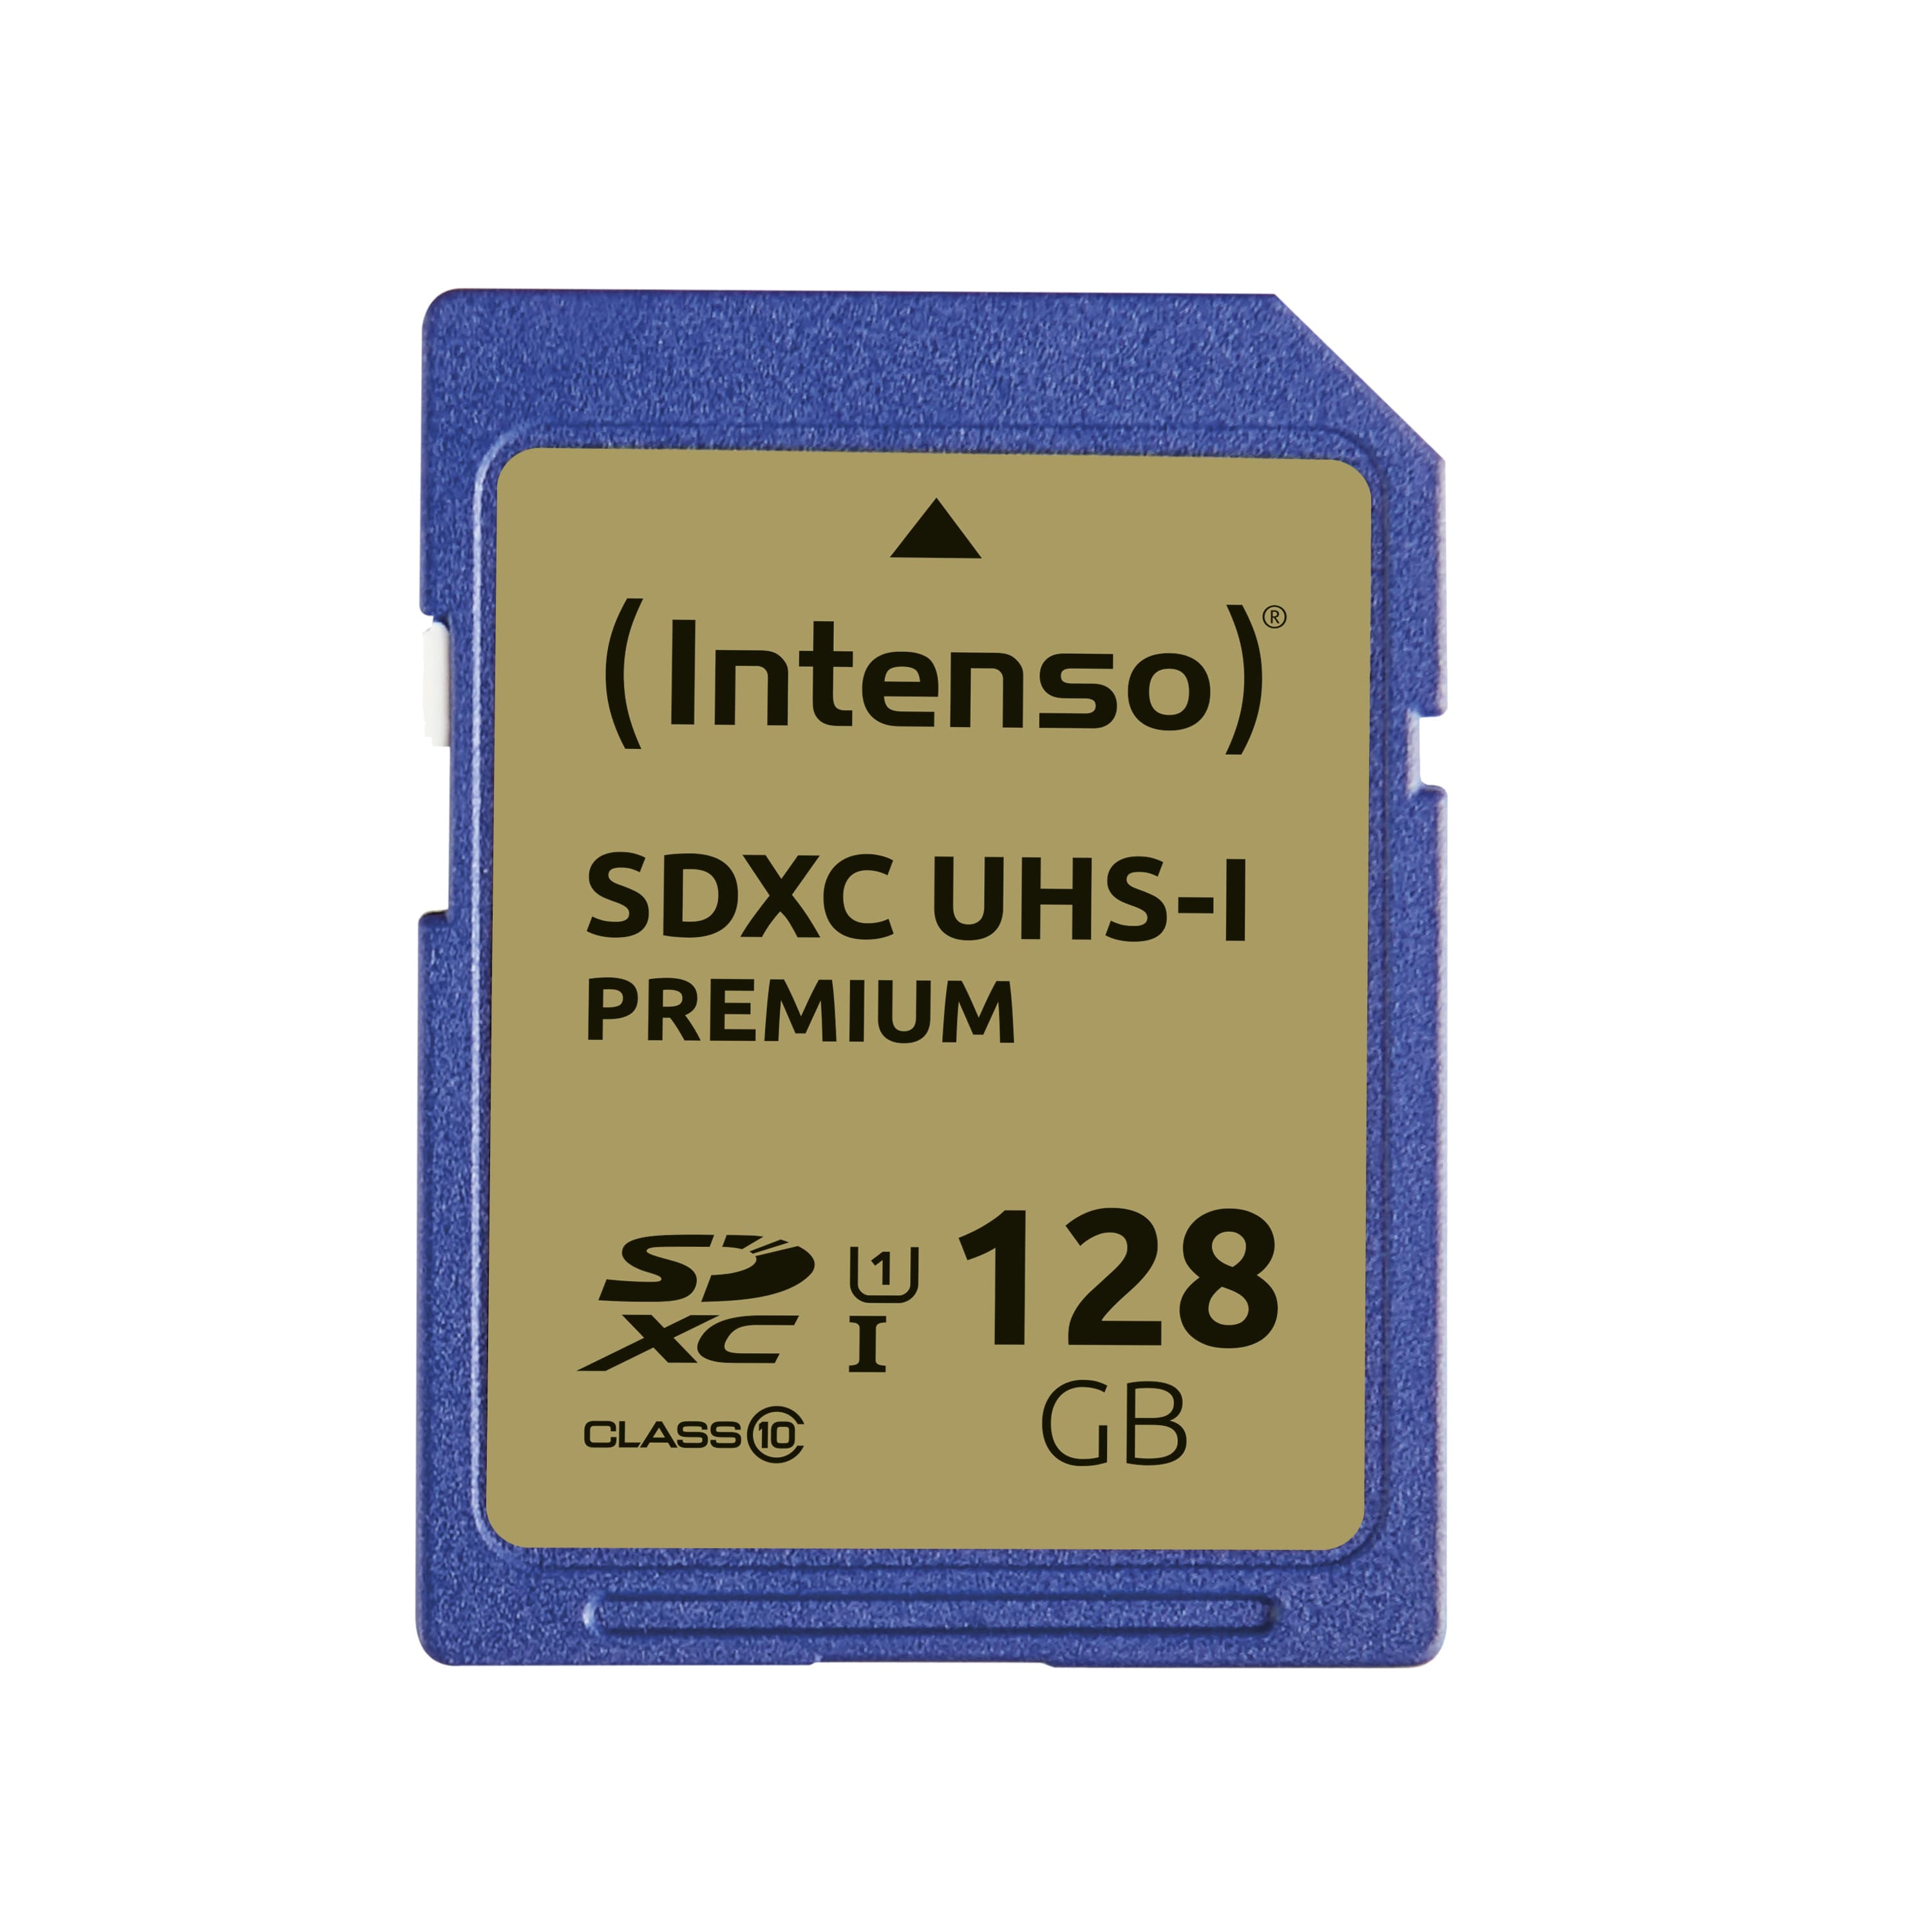 Intenso Premium - Flash-Speicherkarte - 128 GB